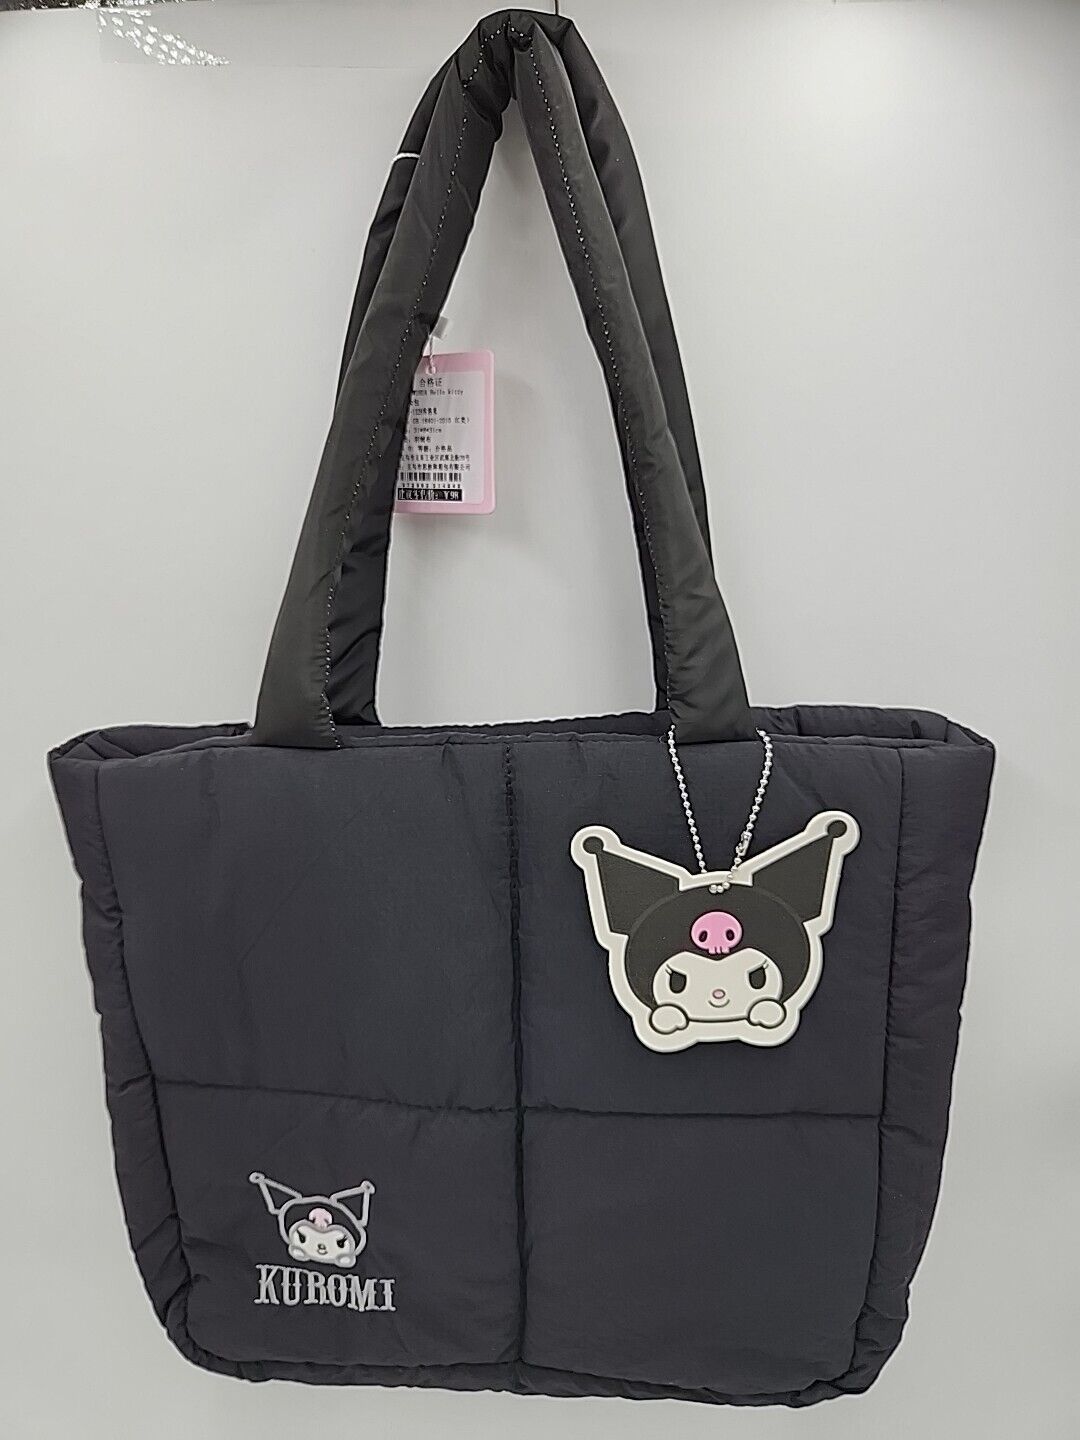 NEW Sanrio Kuromi Puff Tote Bag. Black